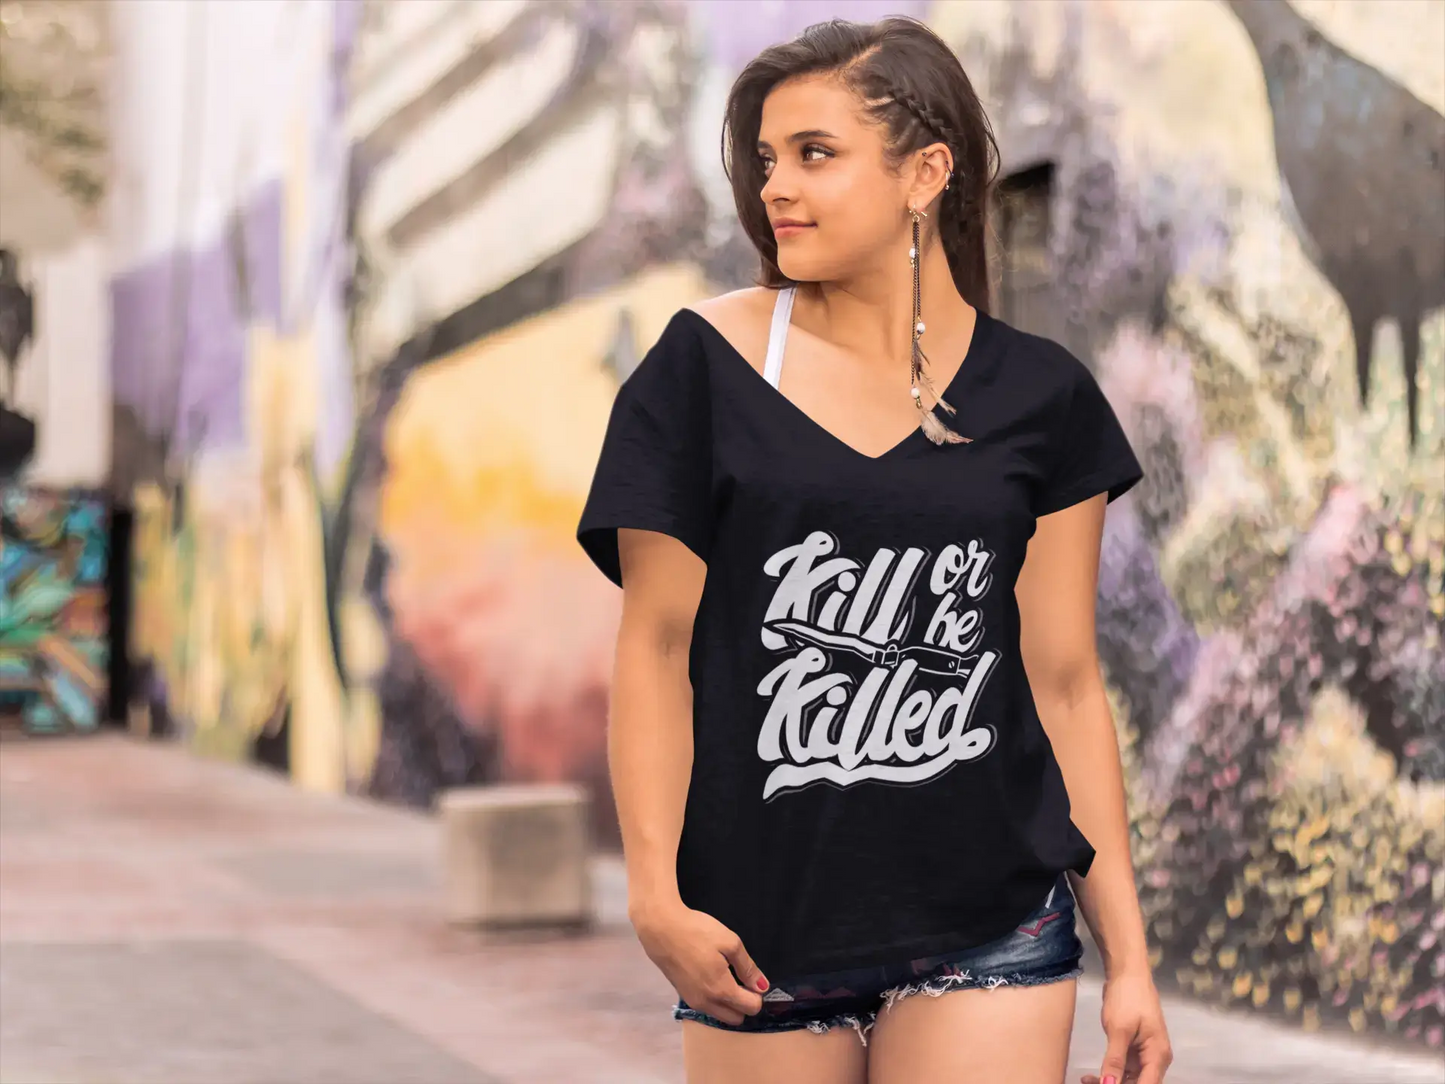 ULTRABASIC Women's T-Shirt Kill Or Be Killed - Trust No One Inspiring Slogan Tee